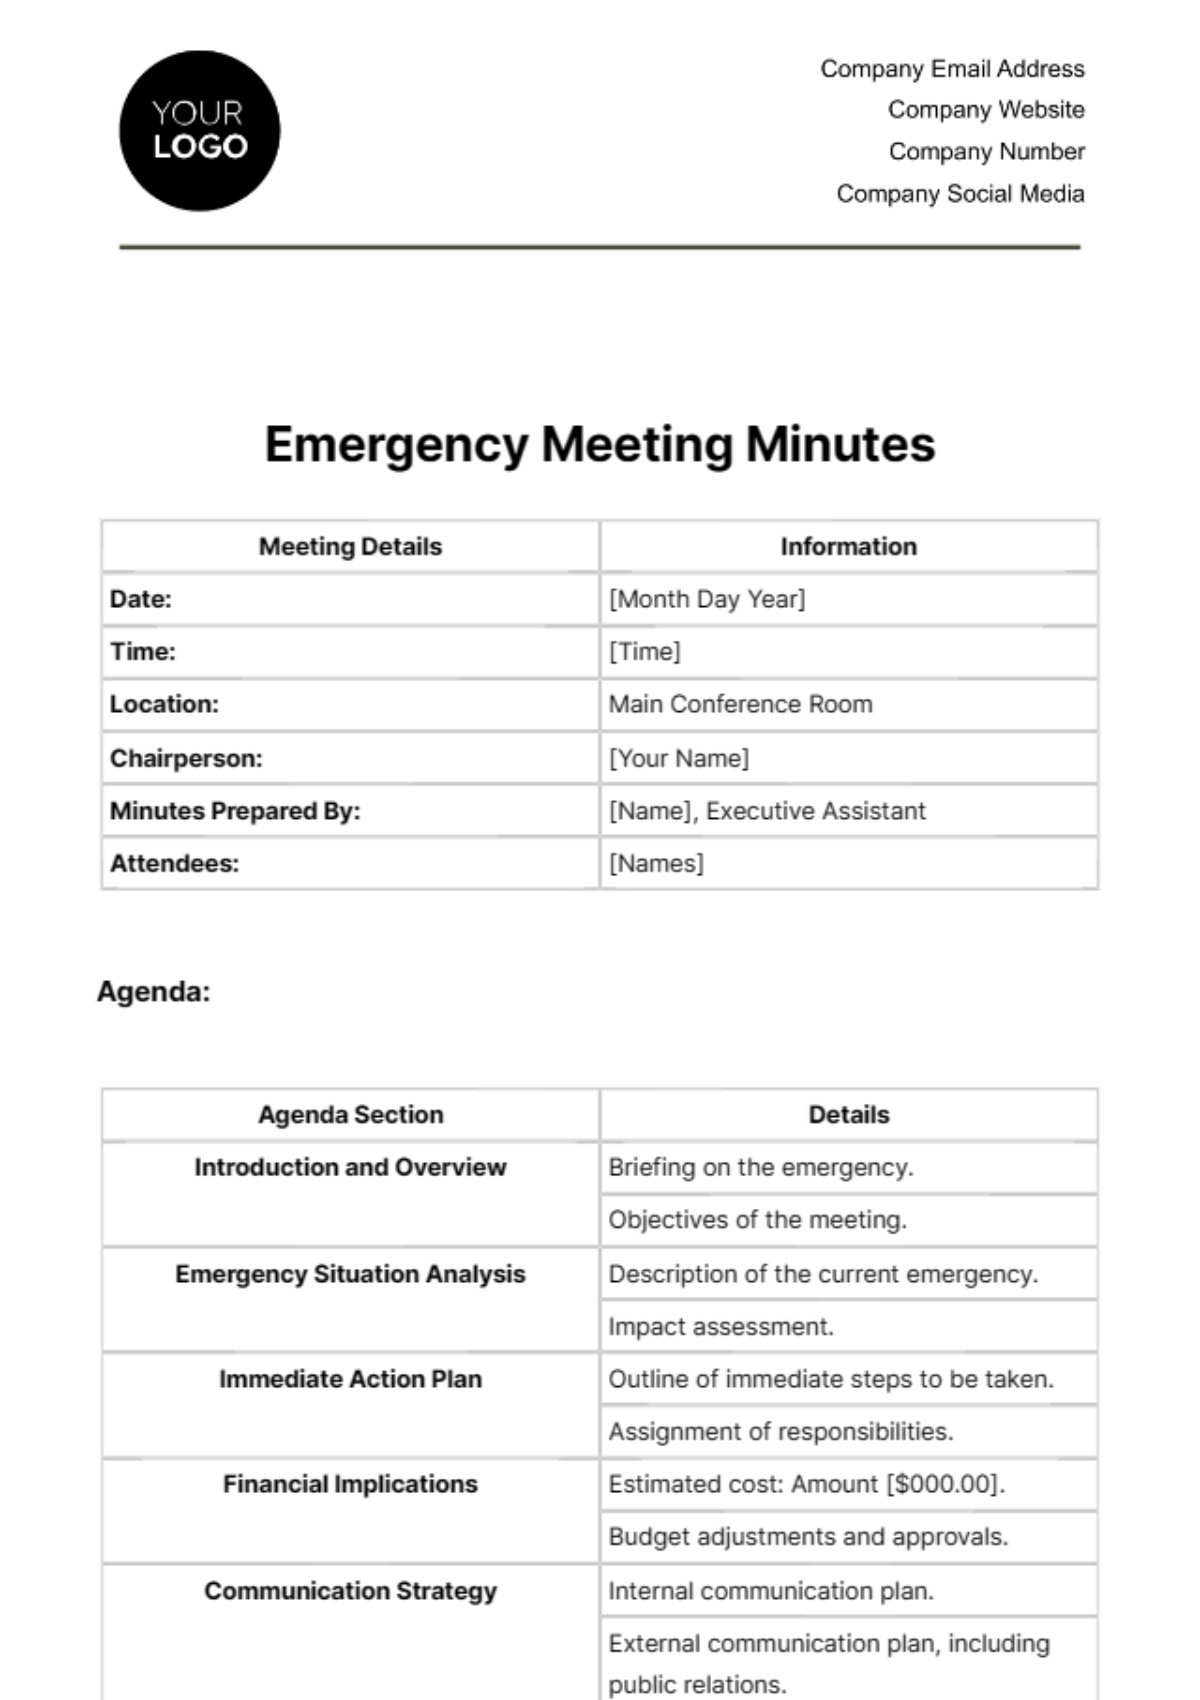 Emergency Meeting Minutes Template